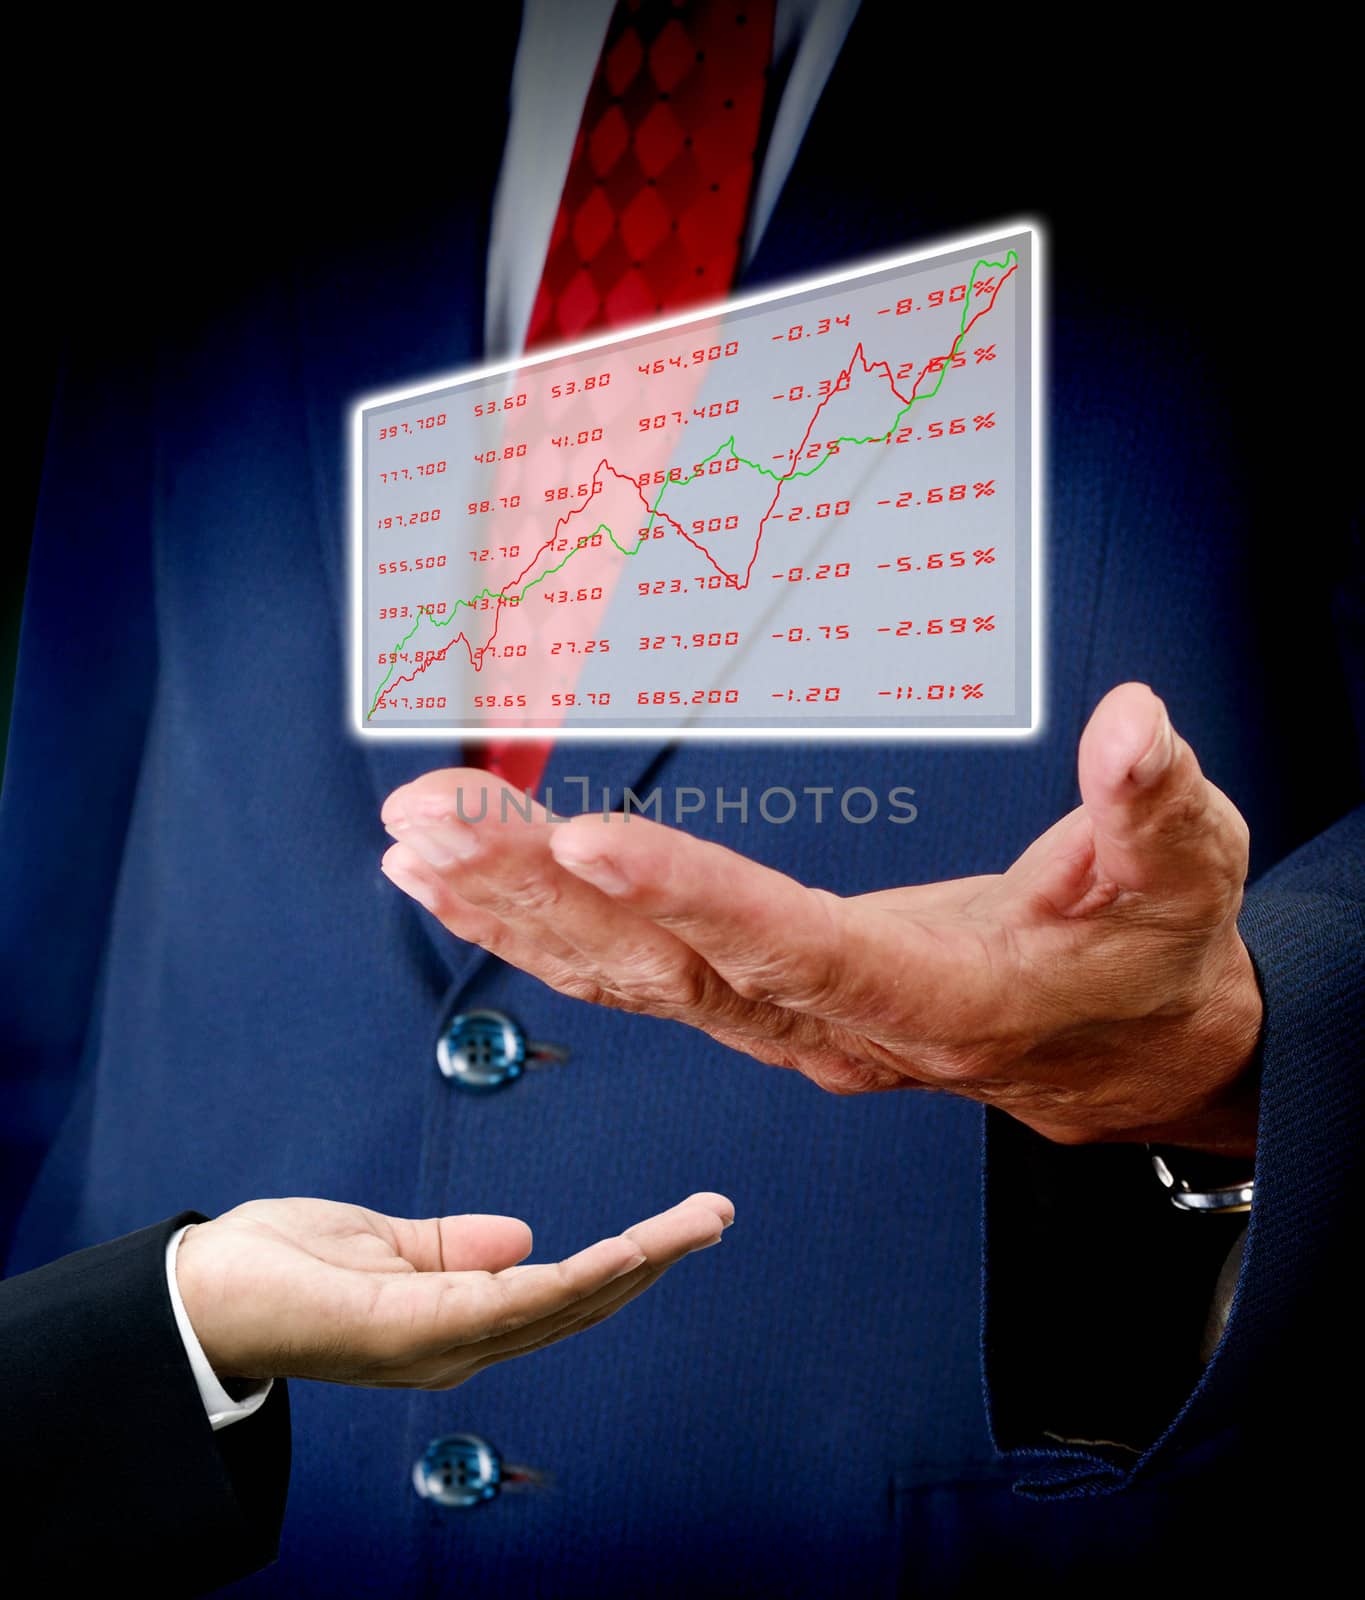 Stock exchange analysis data in senior hand by pixbox77